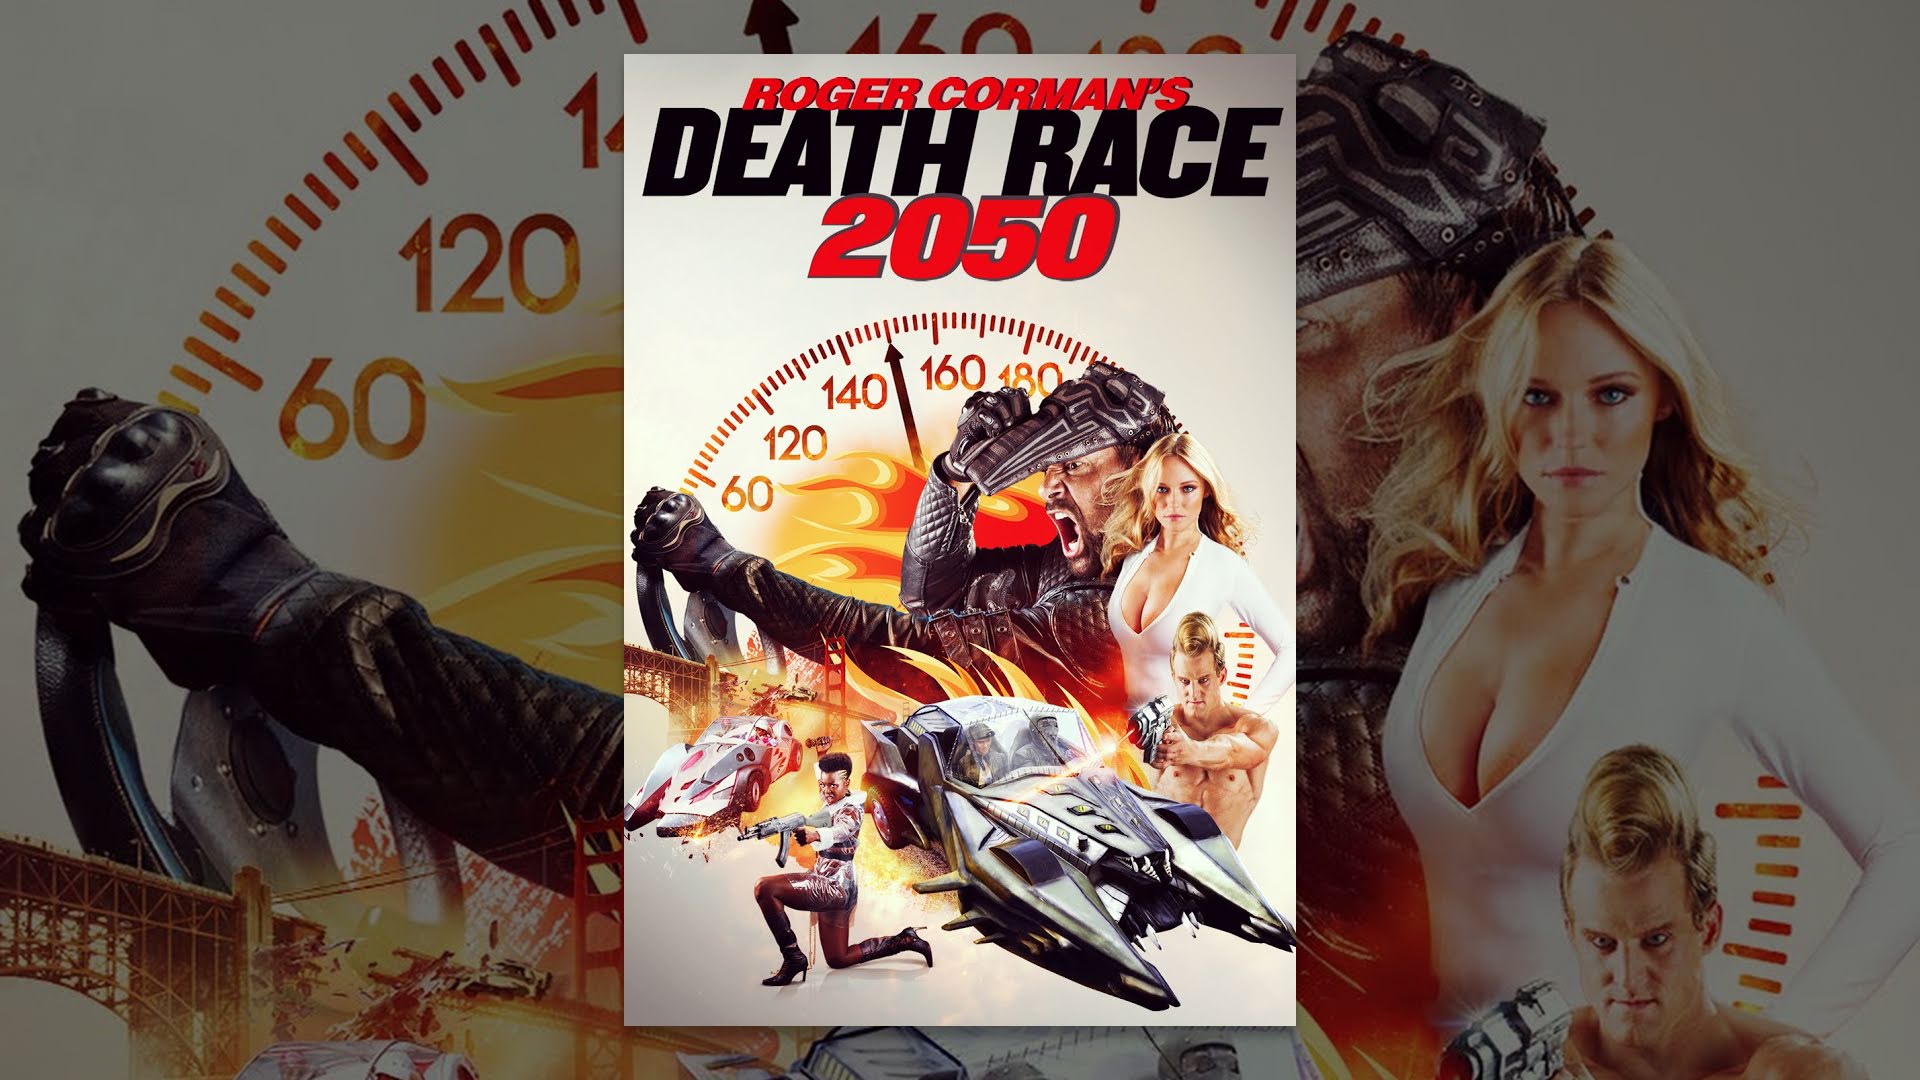 Roger Corman’s Death Race 2050